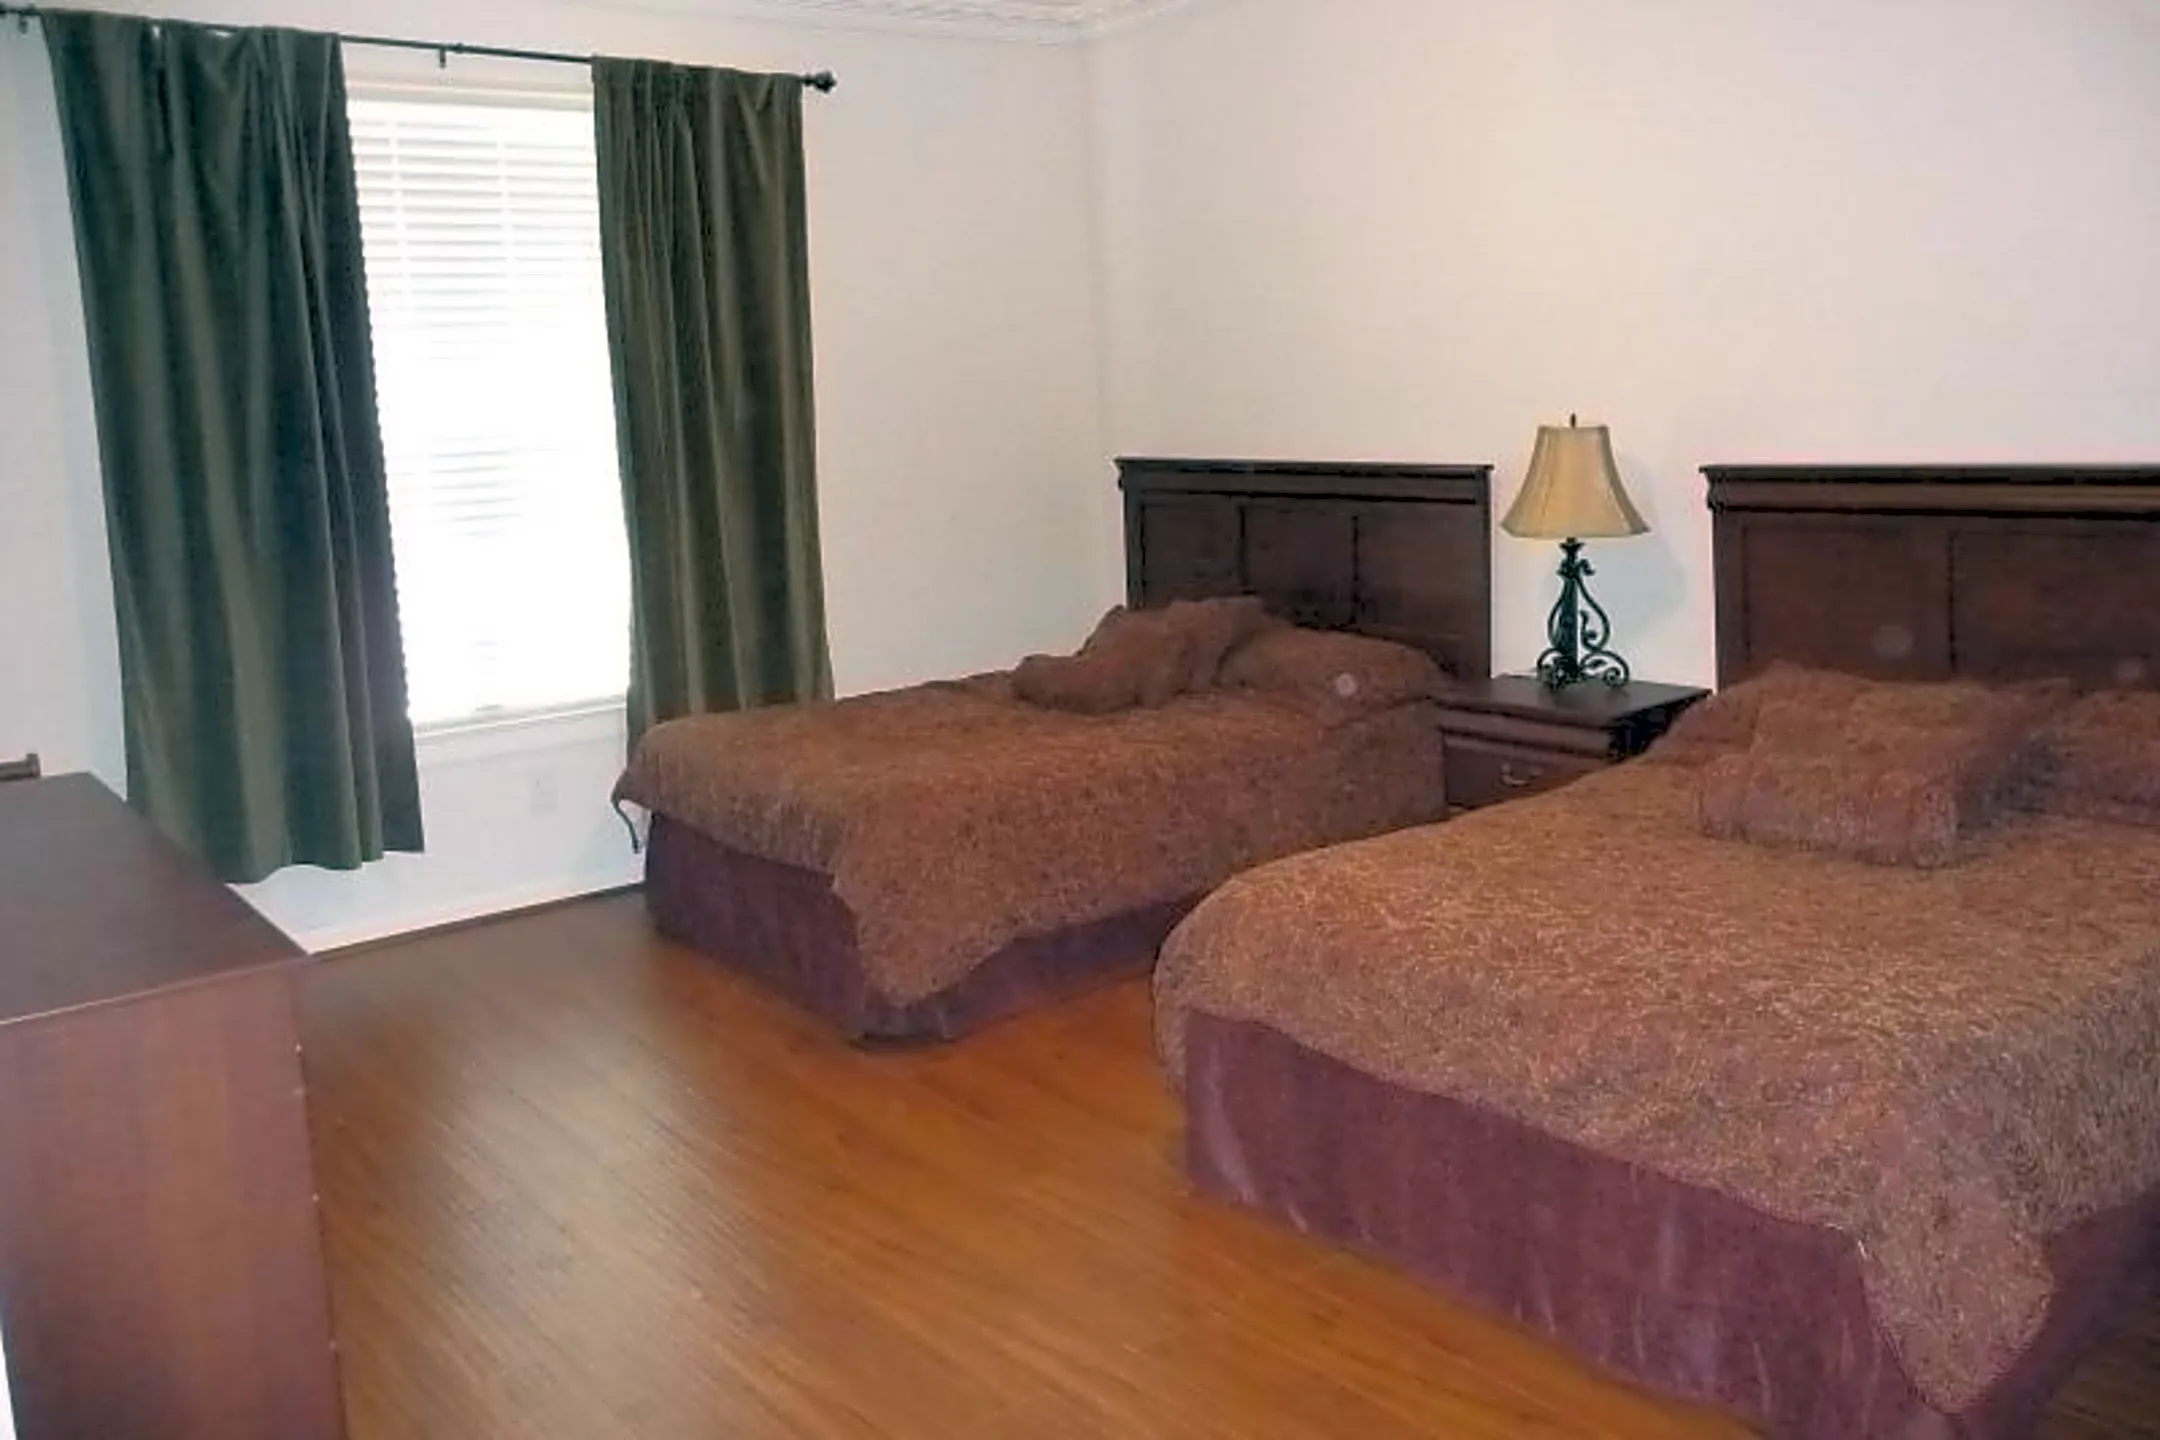 Bedroom - 6655 W Sam Houston Pkwy S - Houston, TX